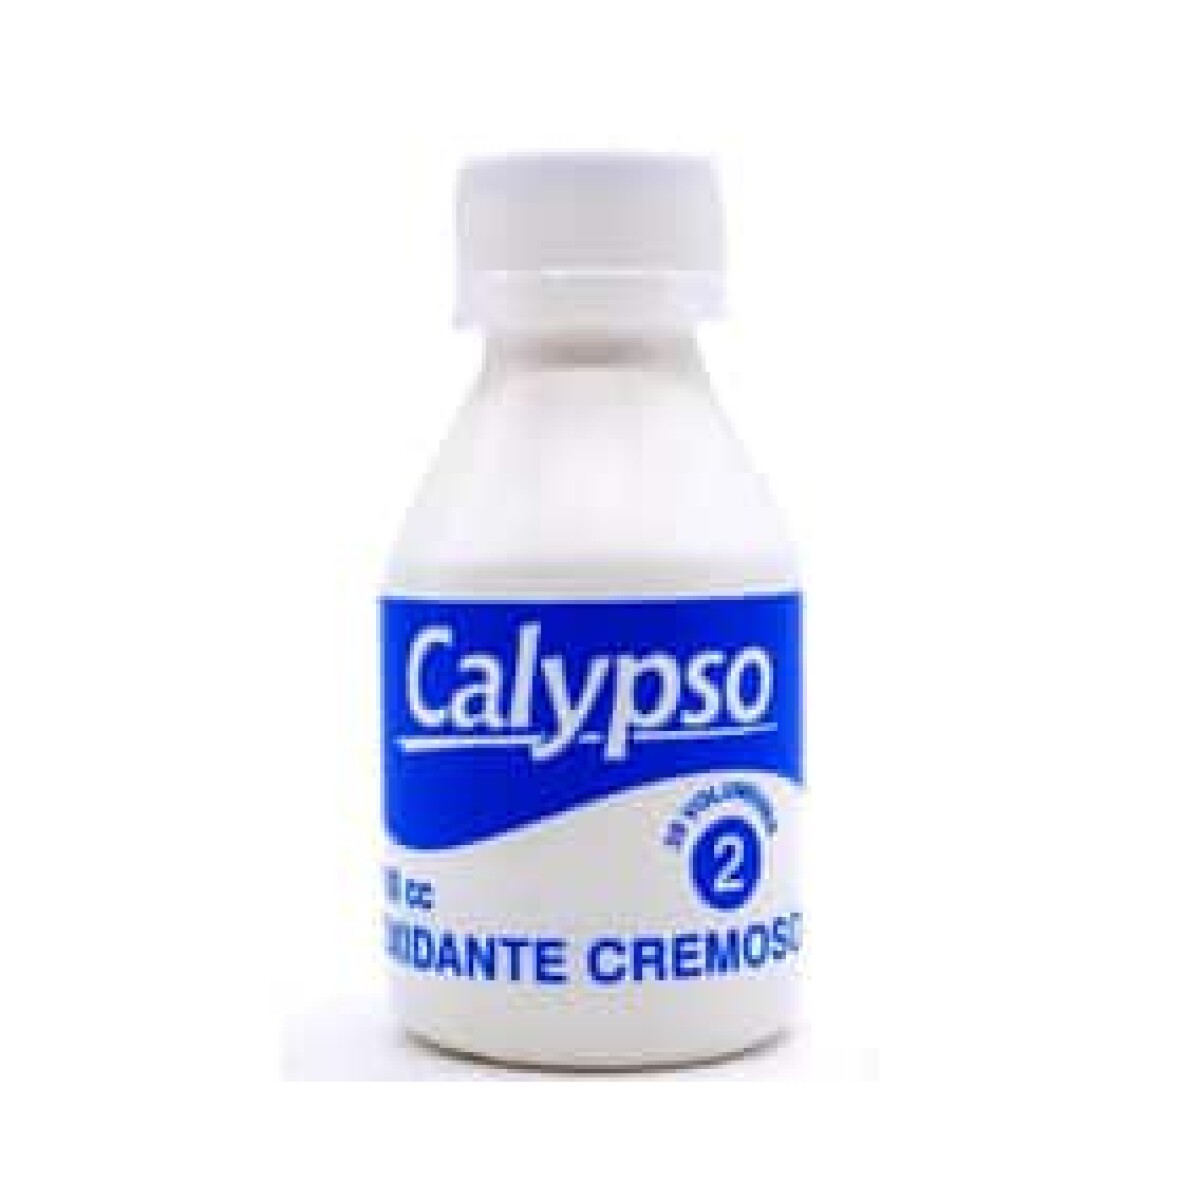 Oxidante Cremoso Nr2 20 Vol Calypso 